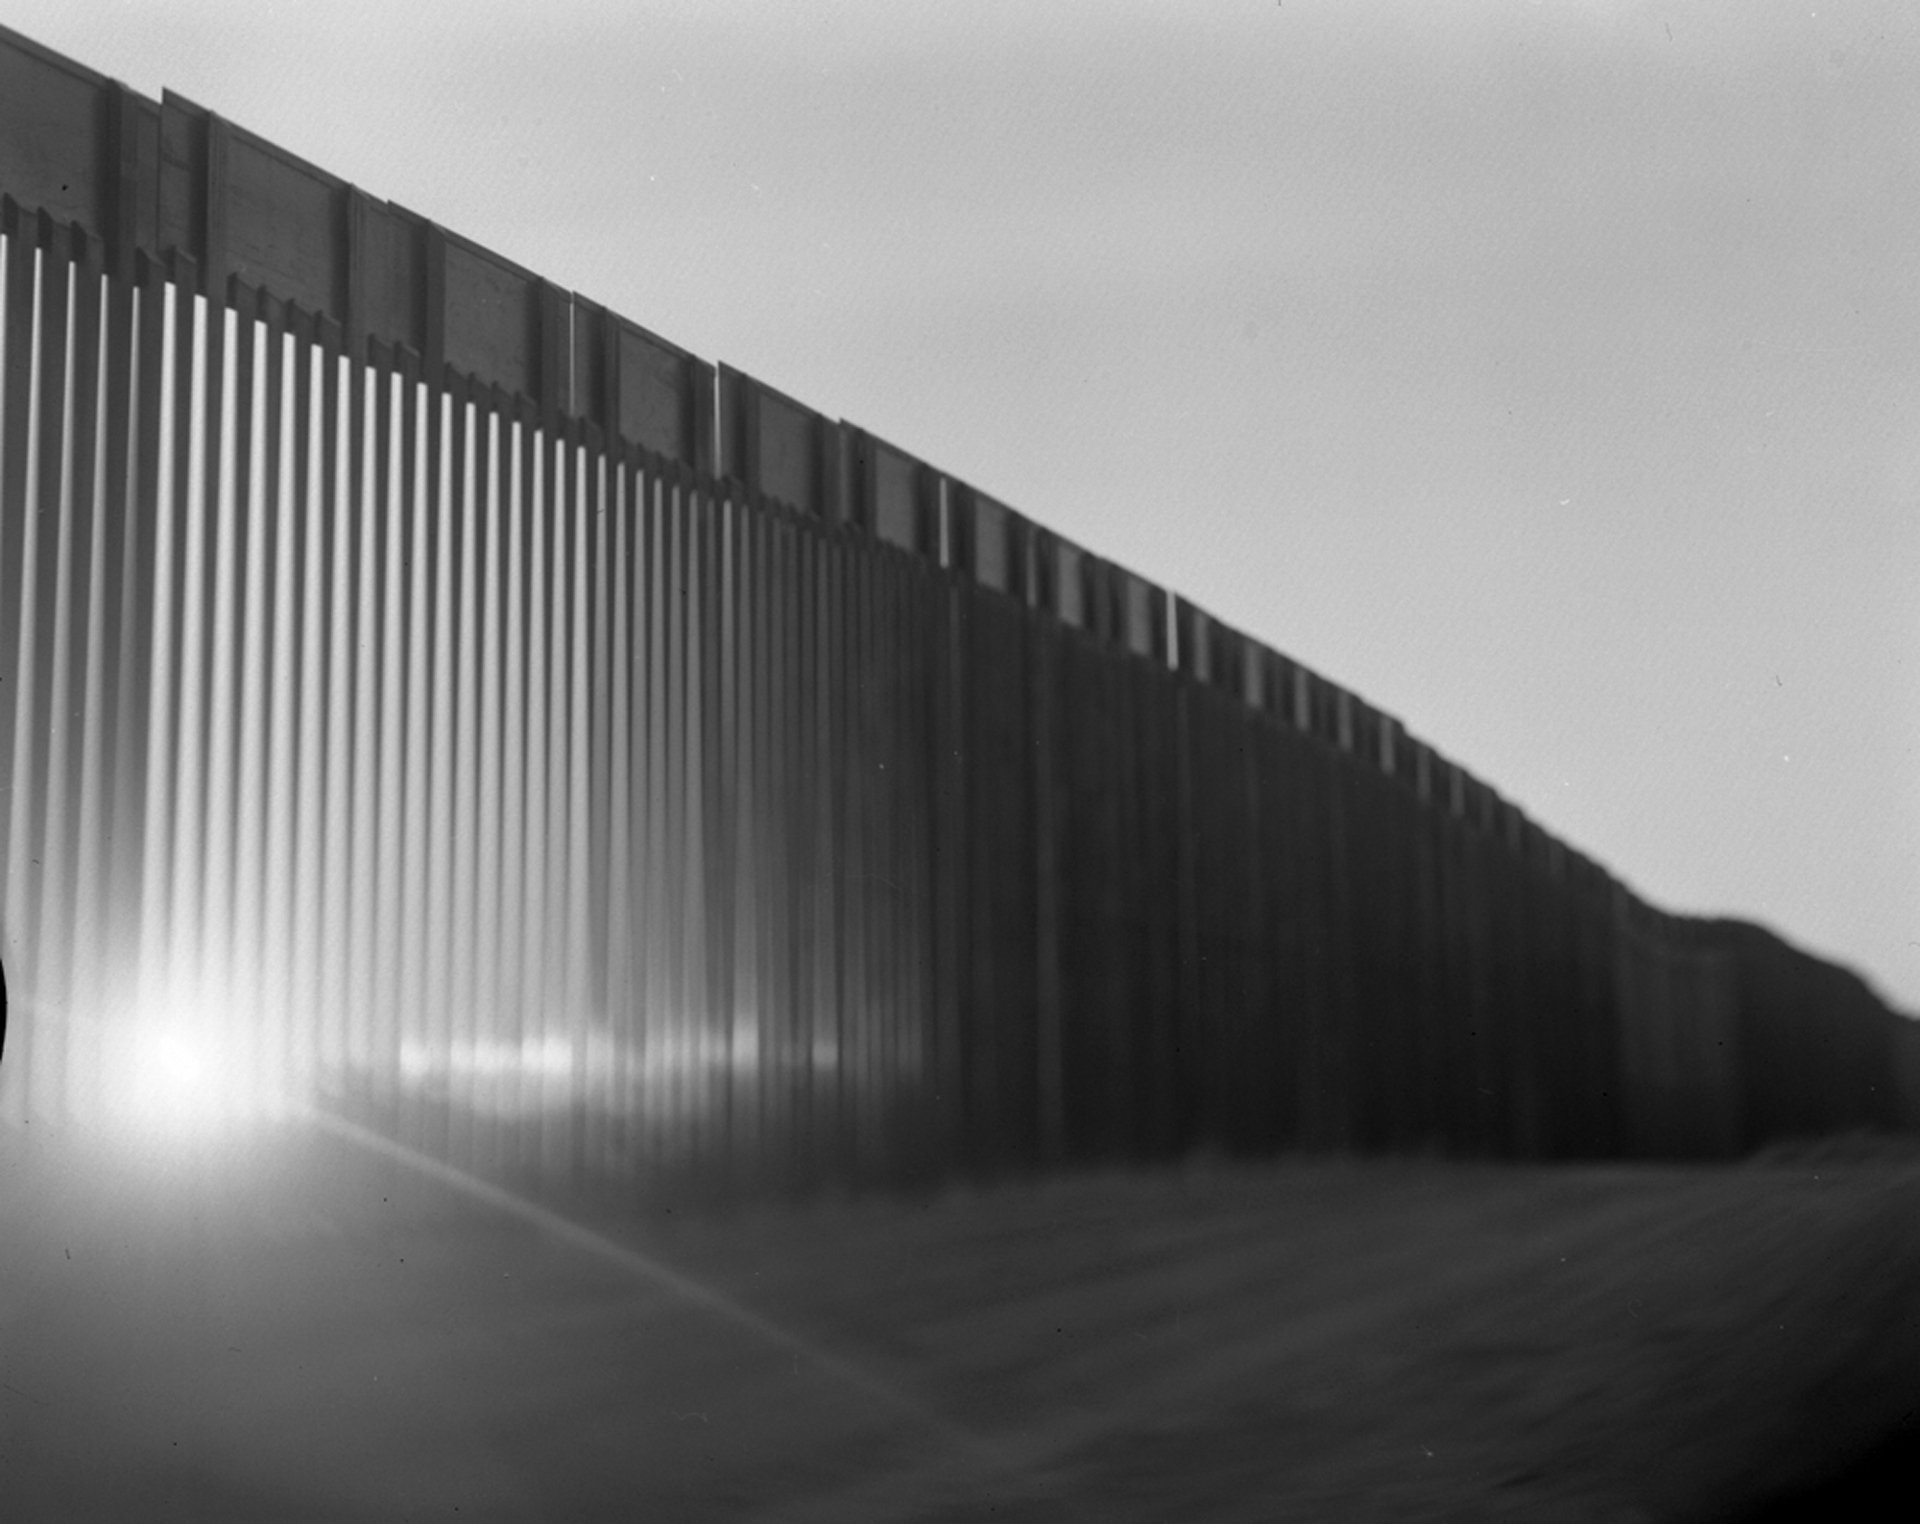 US-MÃ©xico Border Wall